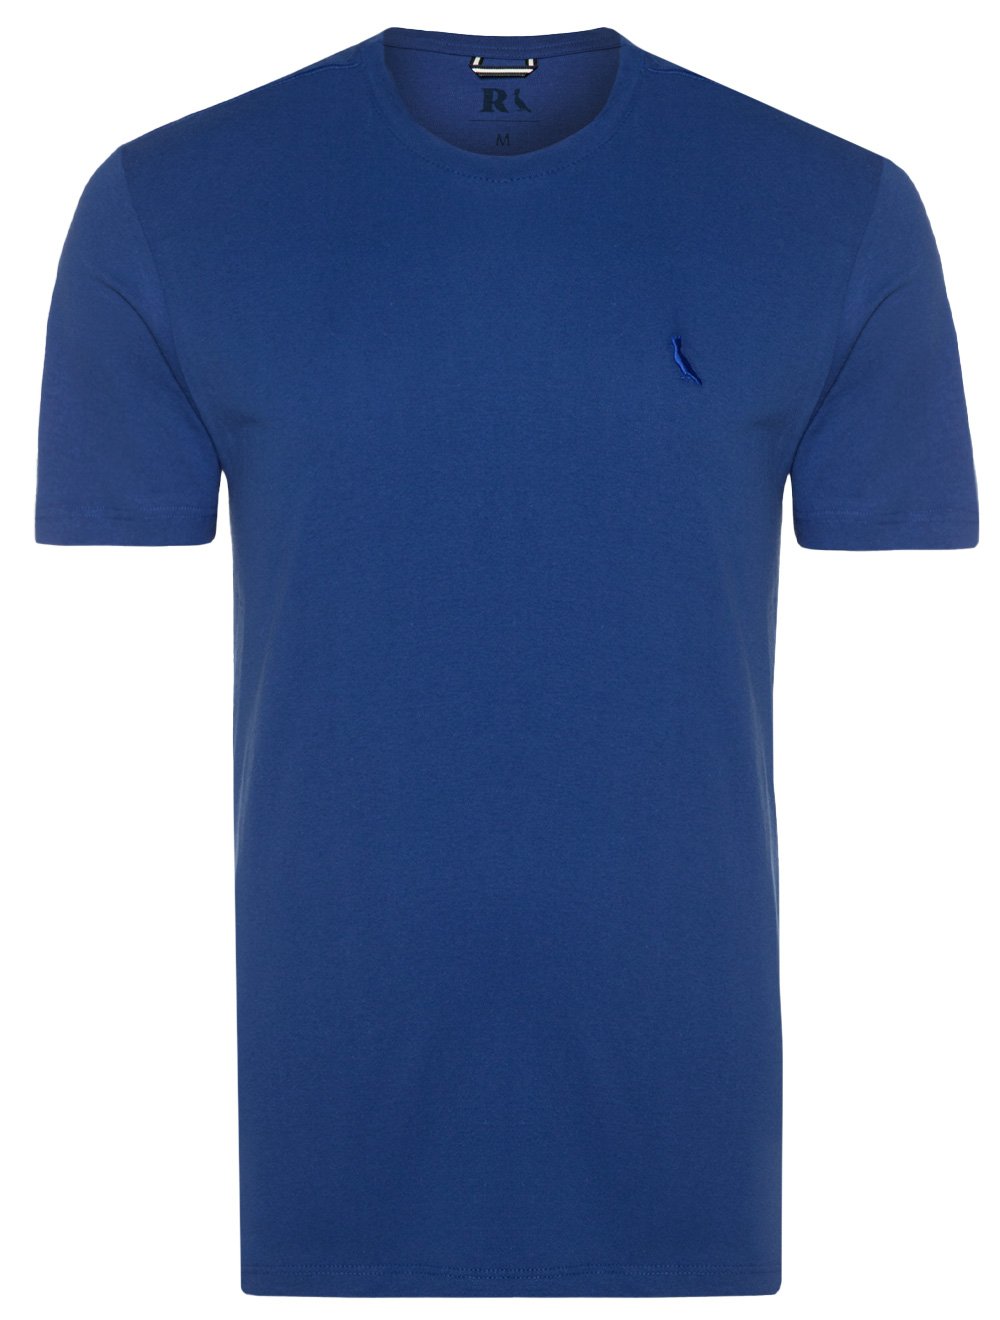 Camiseta Reserva Masculina Regular Pima Cotton Azul Marinho